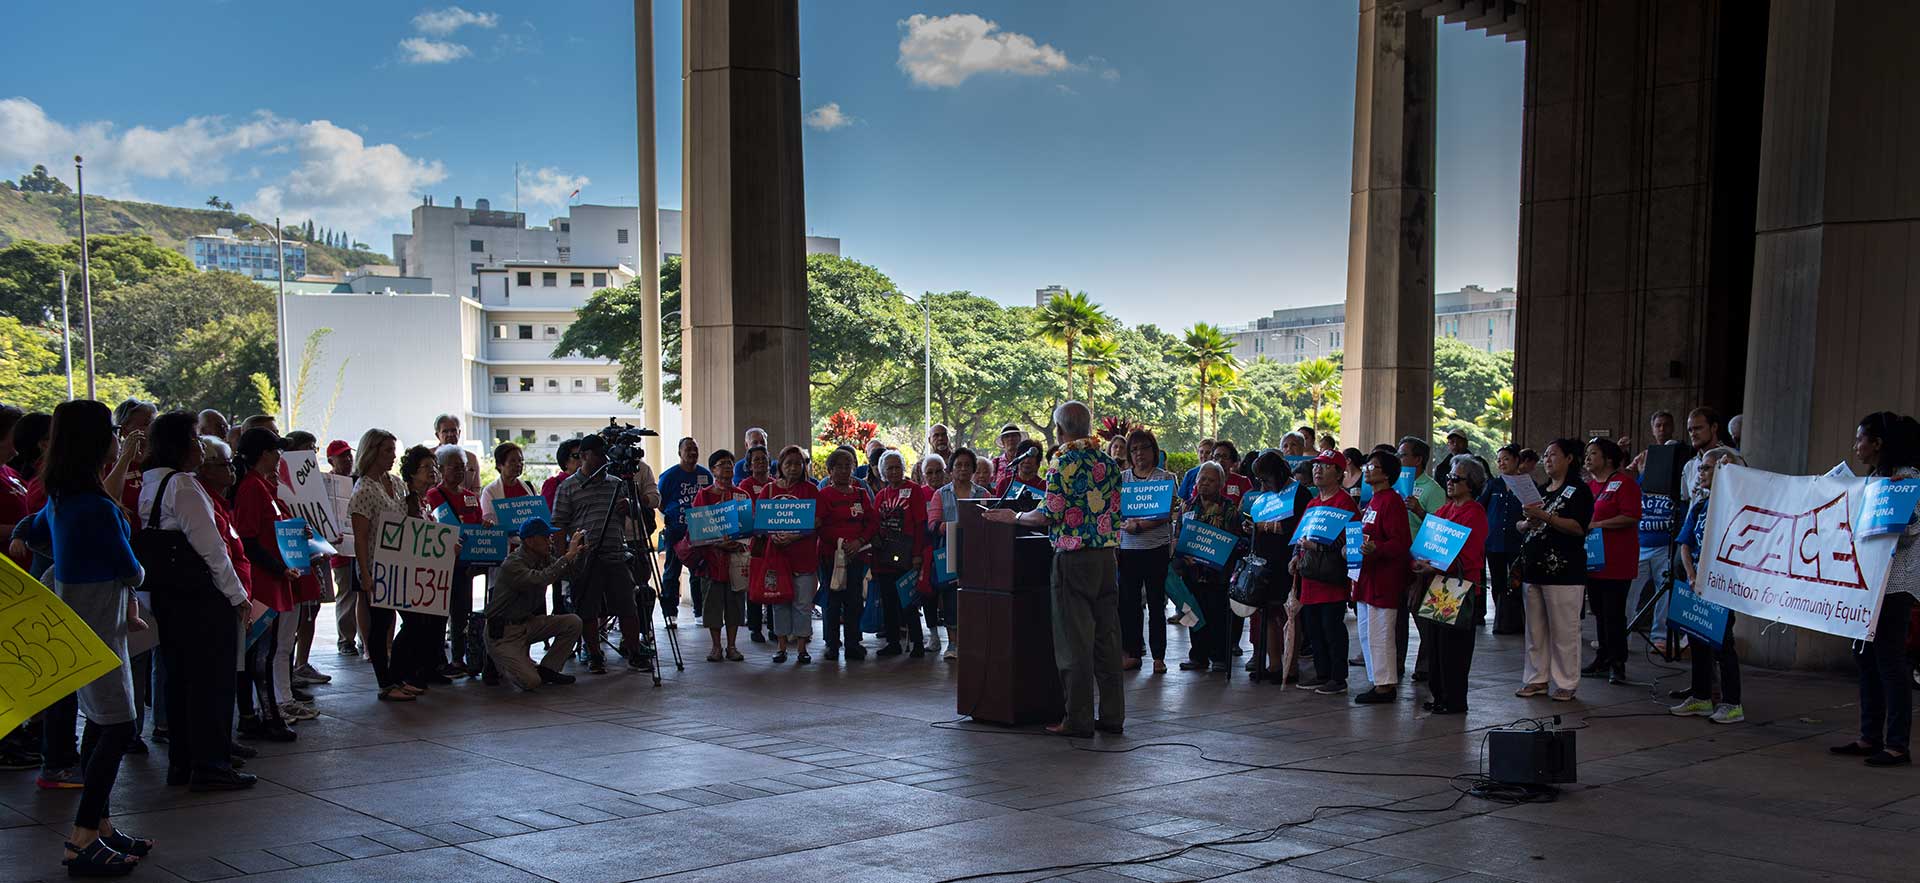 A Kupuna Caregivers rally at the Hawaiʻ State Capitol